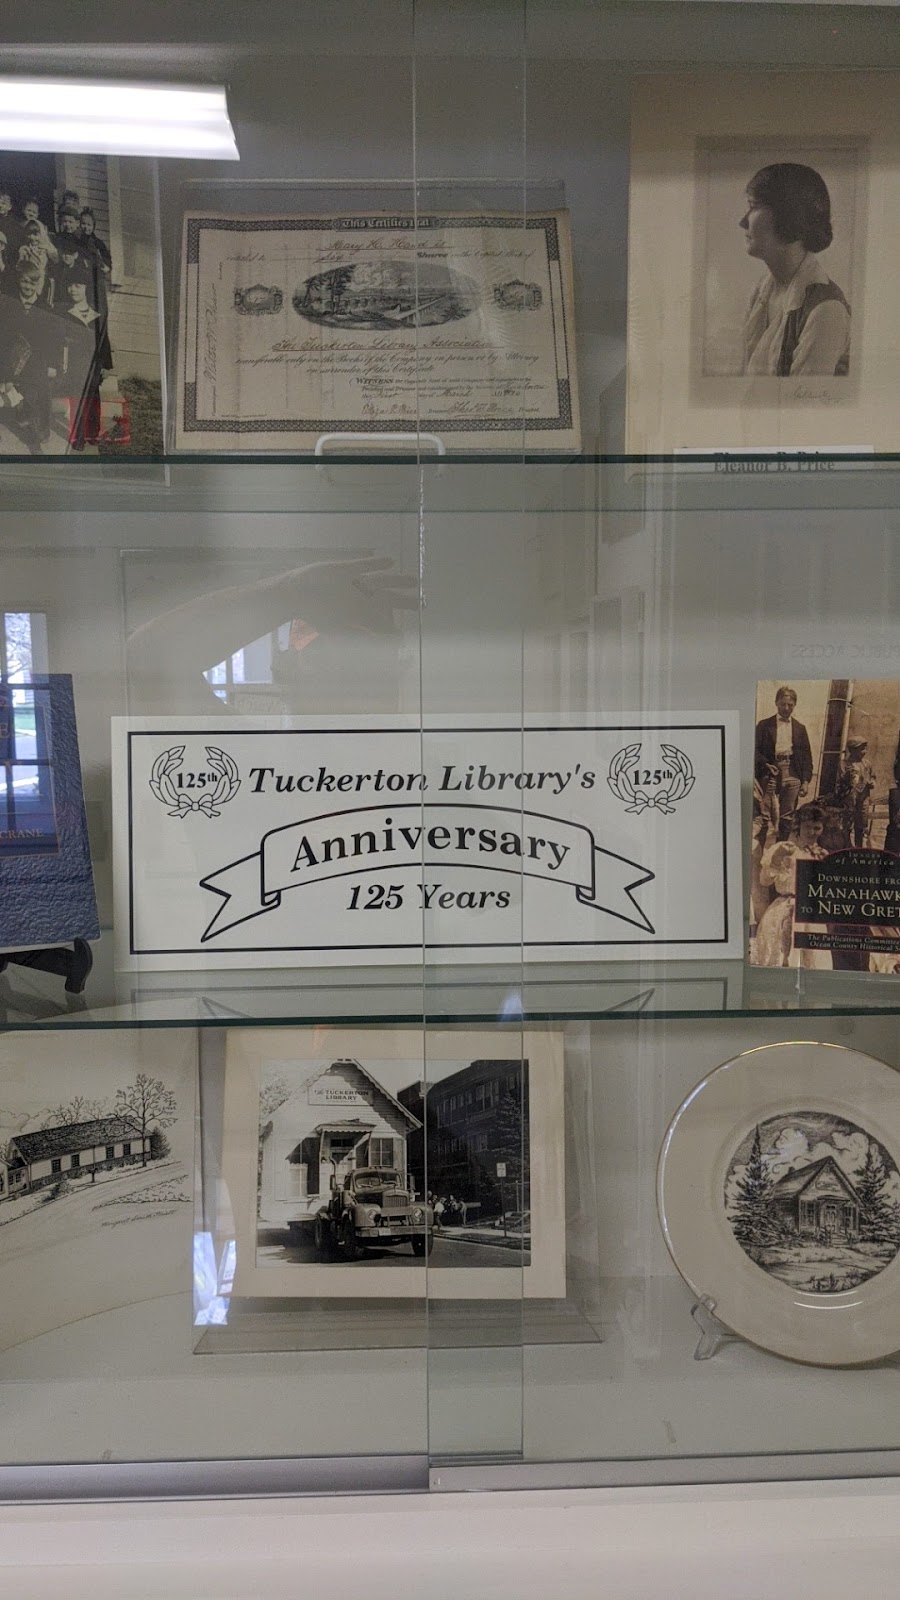 Tuckerton Branch Library | 380 Bay Ave, Tuckerton, NJ 08087 | Phone: (609) 296-1470